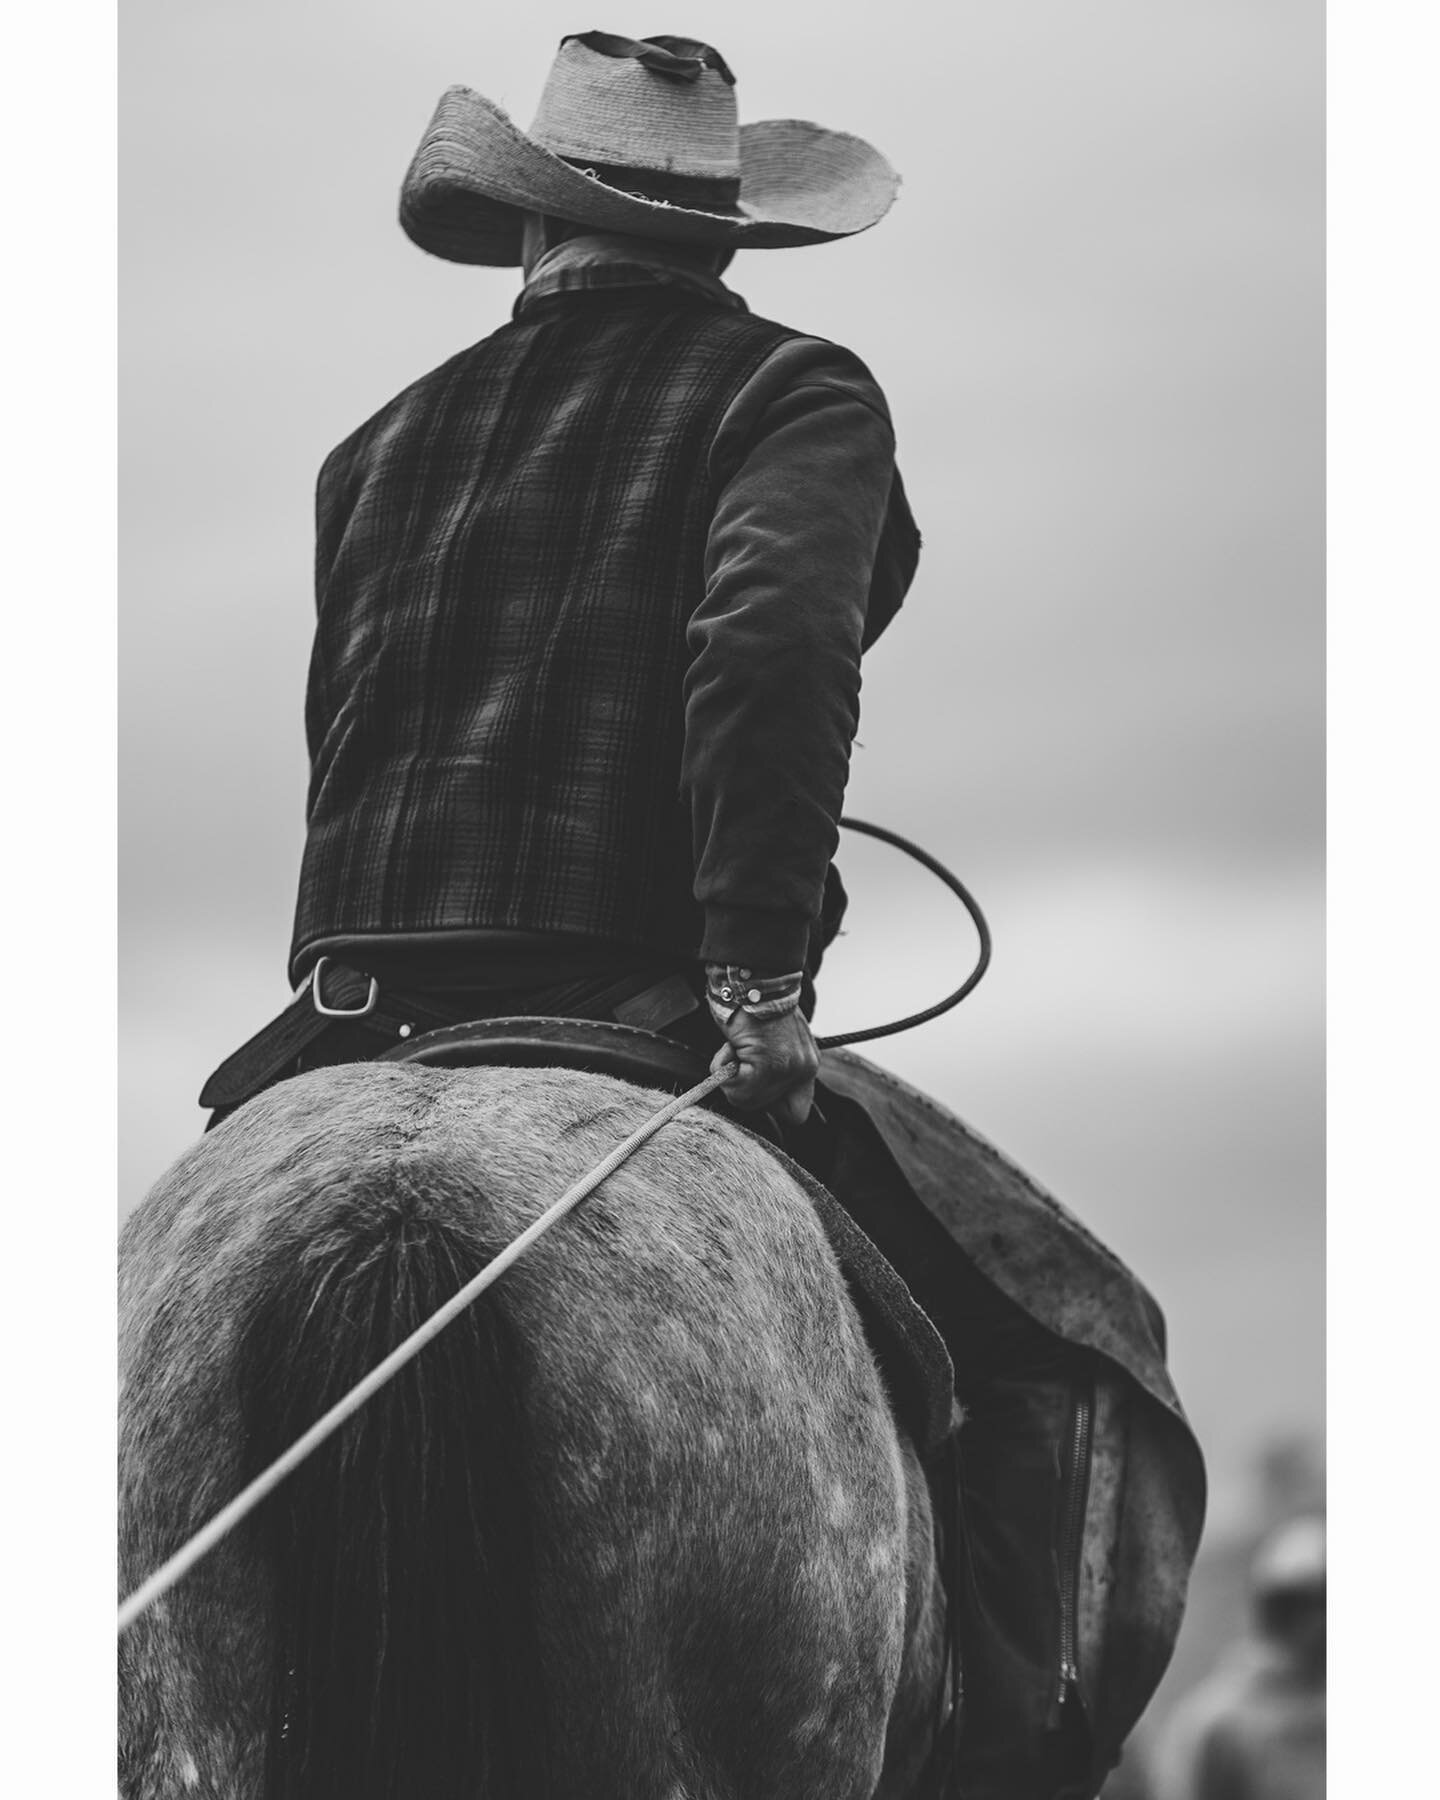 Bar T7 + Jesperson Branding | Ekalaka, Montana 

#brandingseason #cowboys #realranchphotography #brandingcalves #roping #wrangler #westernphotography #kschurrphoto #lifeoutwest #cowboysofmontana #heelanddrag #longlivecowboys #ekalakamontans #cowboyco